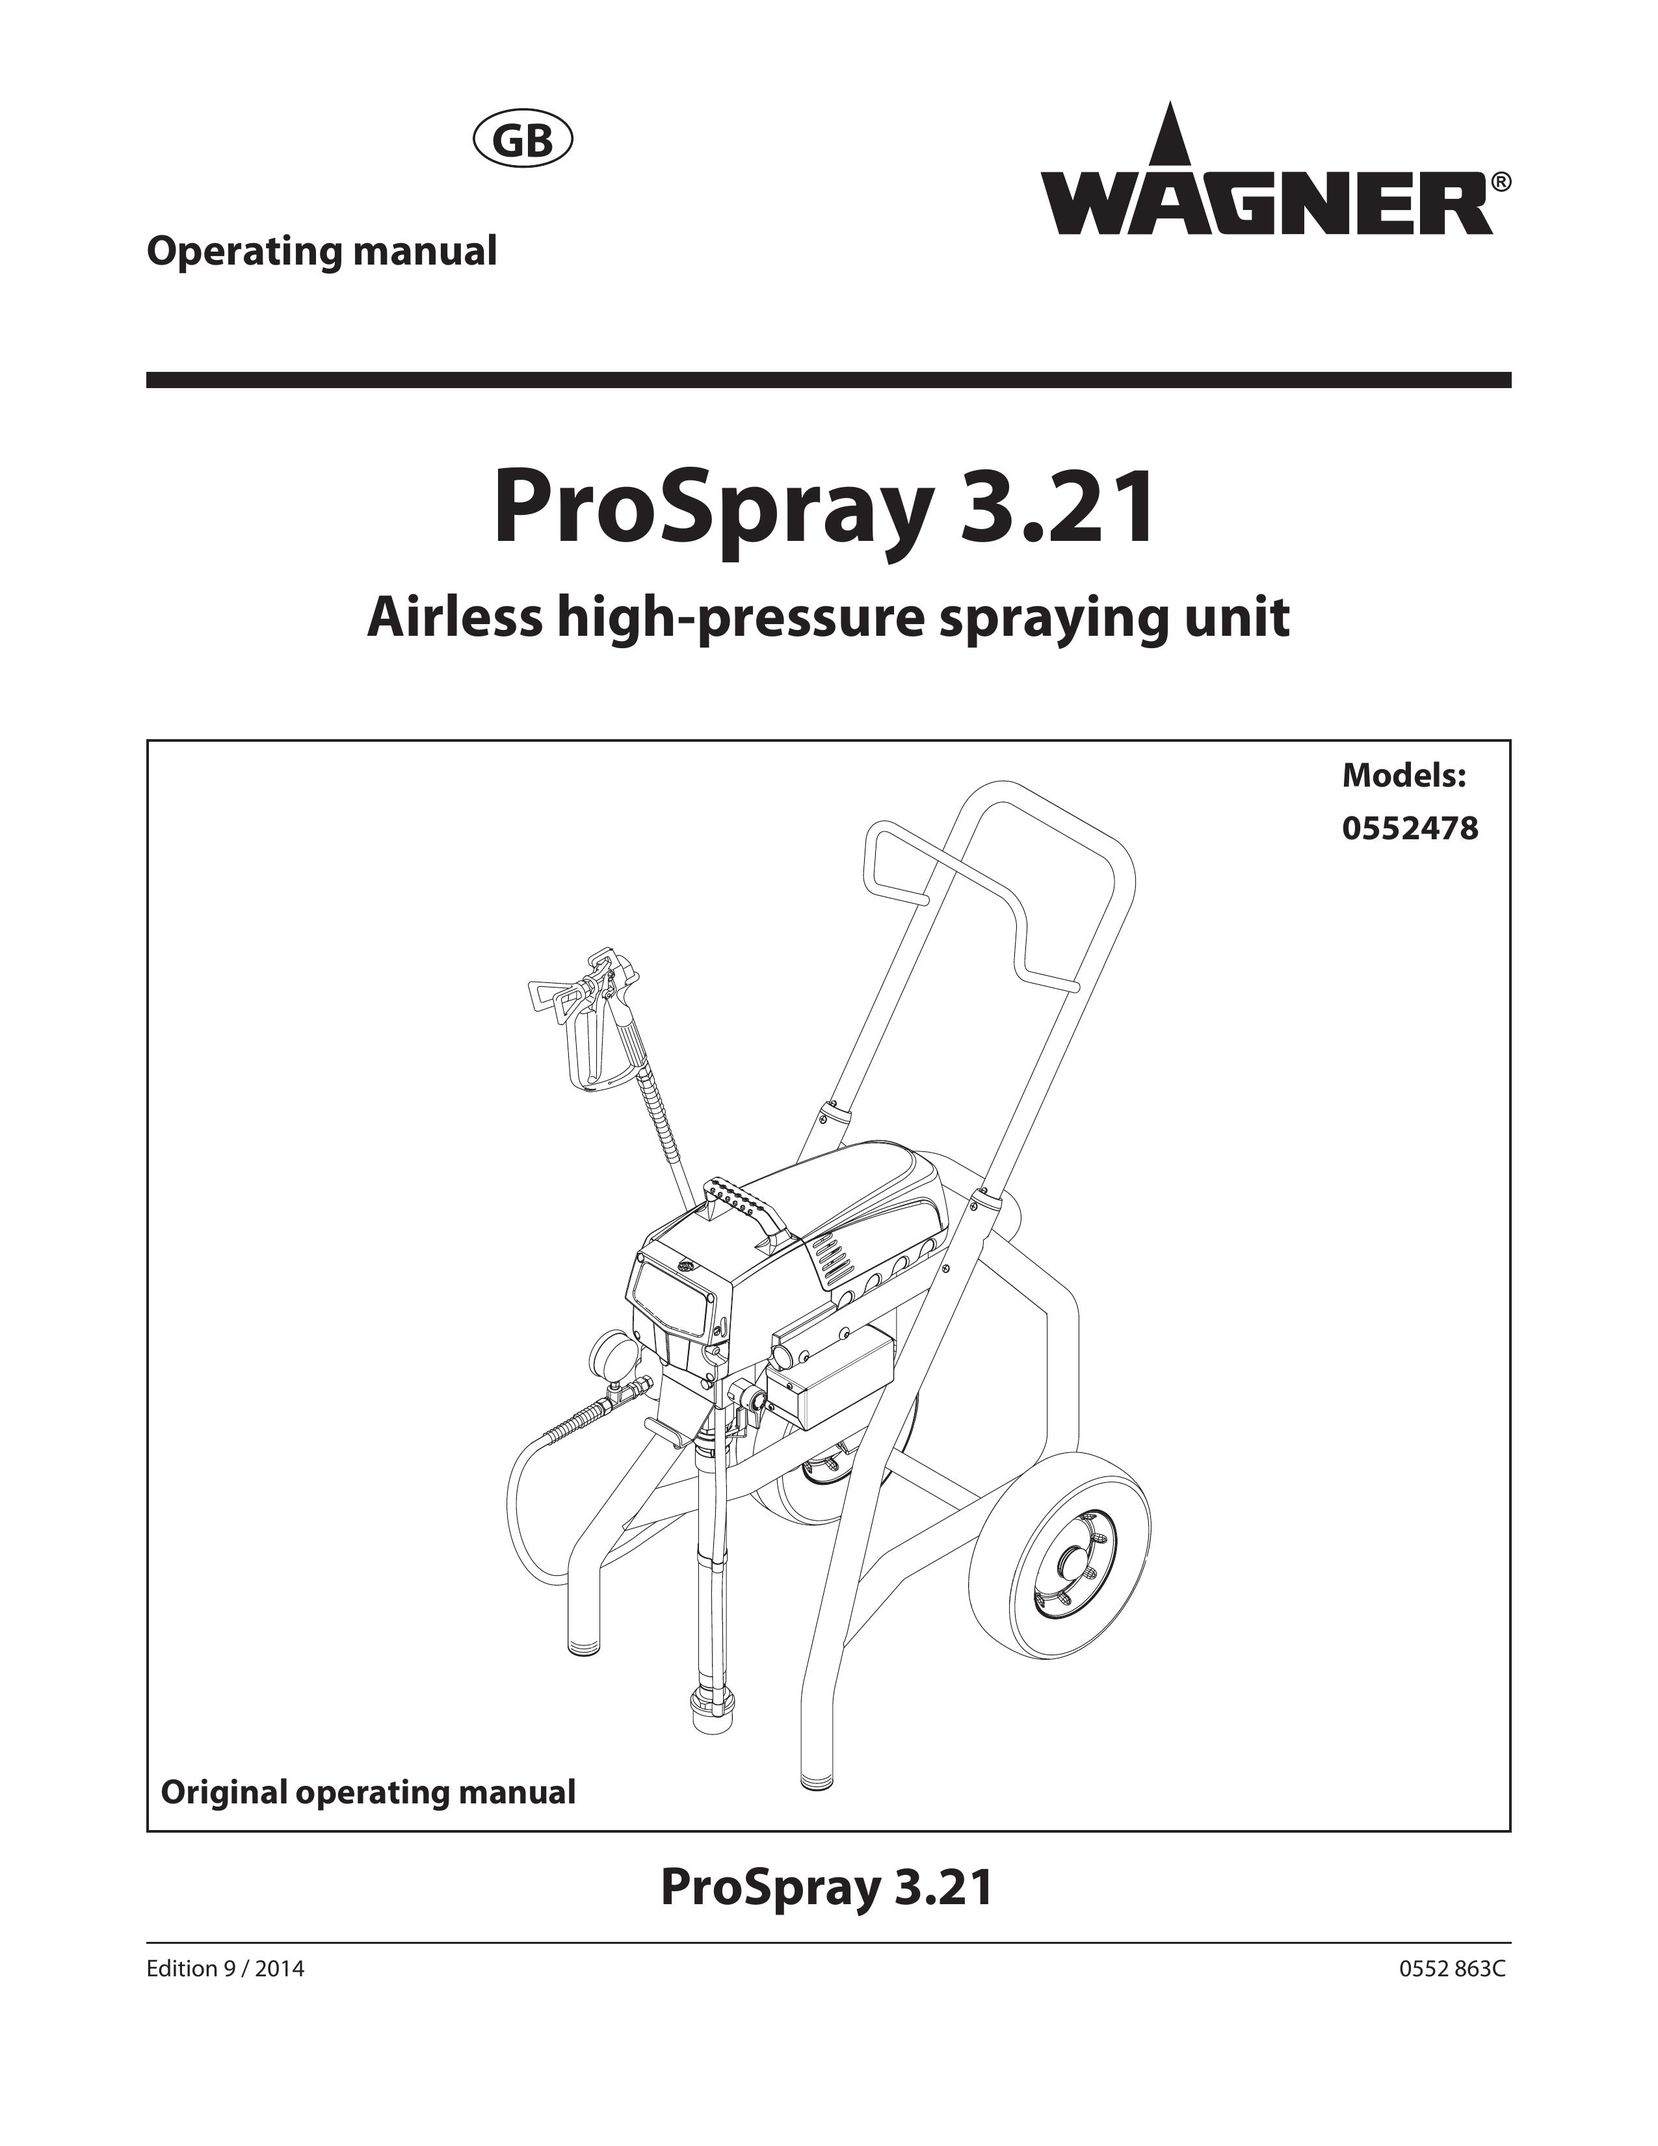 Wagner SprayTech 552478 Paint Sprayer User Manual